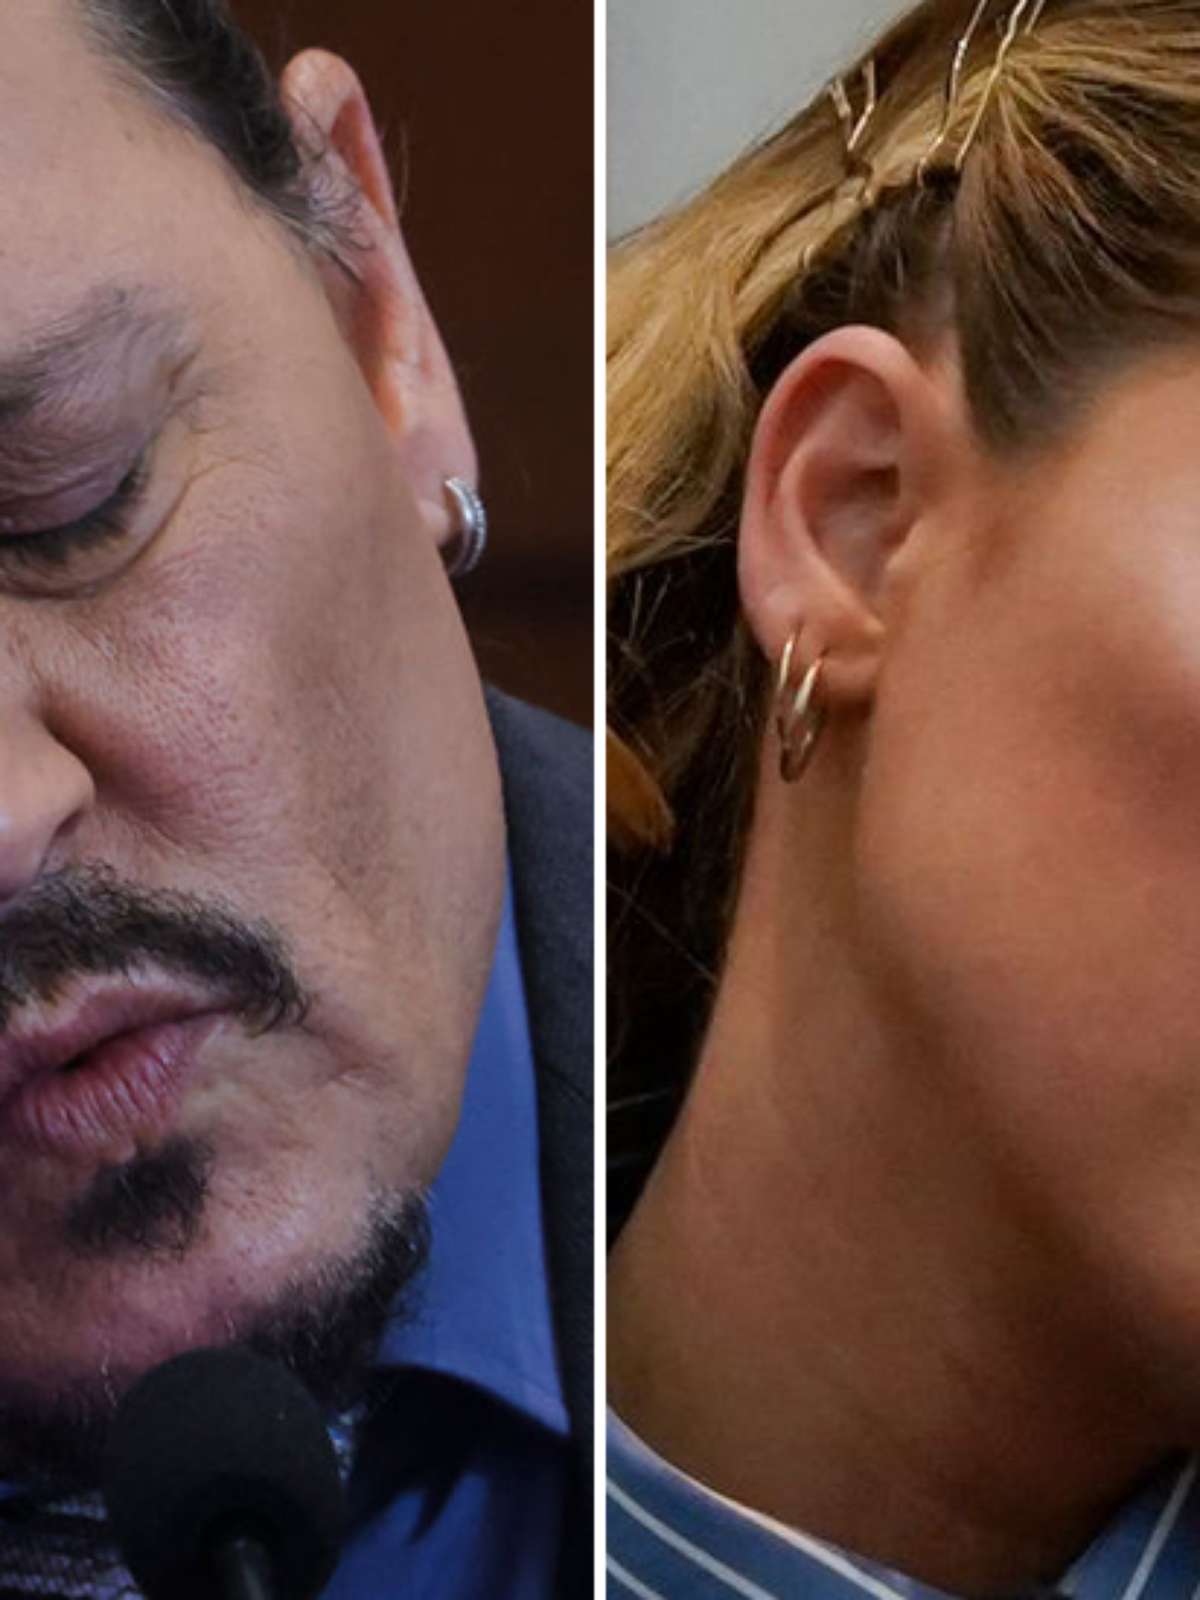 Johnny Depp vence processo contra Amber Heard: 10 momentos-chave